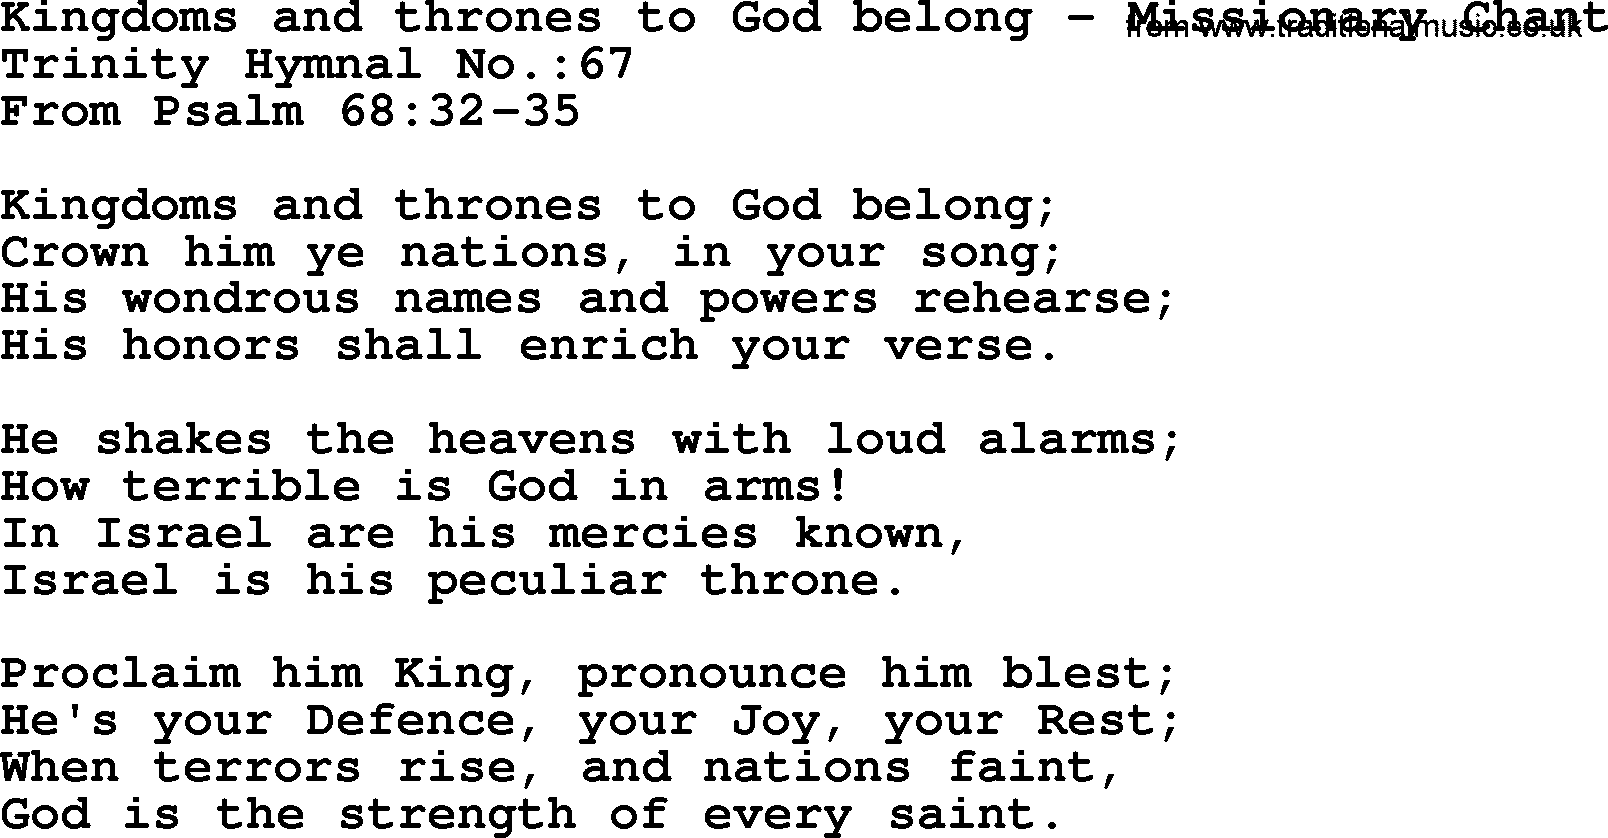 Trinity Hymnal Hymn: Kingdoms And Thrones To God Belong--Missionary Chant, lyrics with midi music